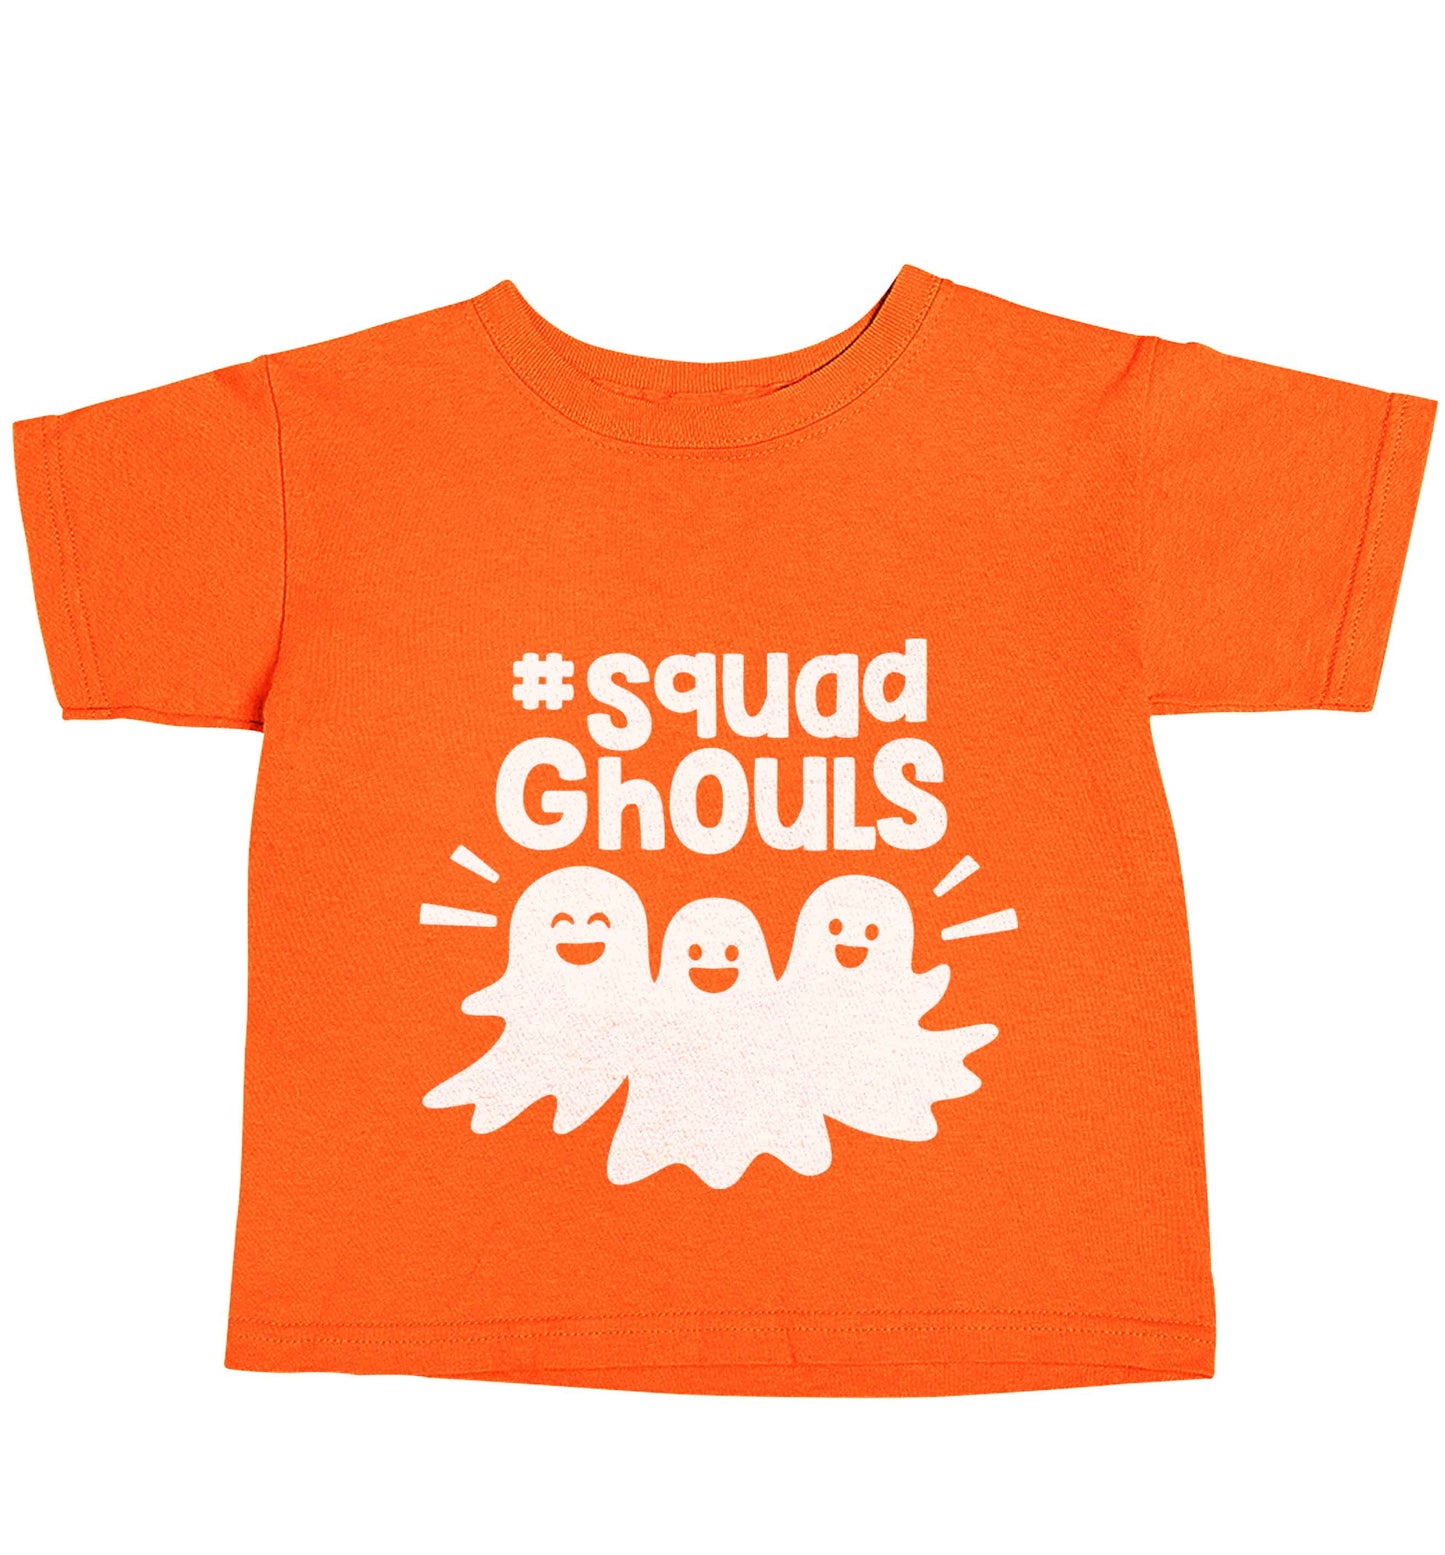 Squad ghouls Kit orange baby toddler Tshirt 2 Years